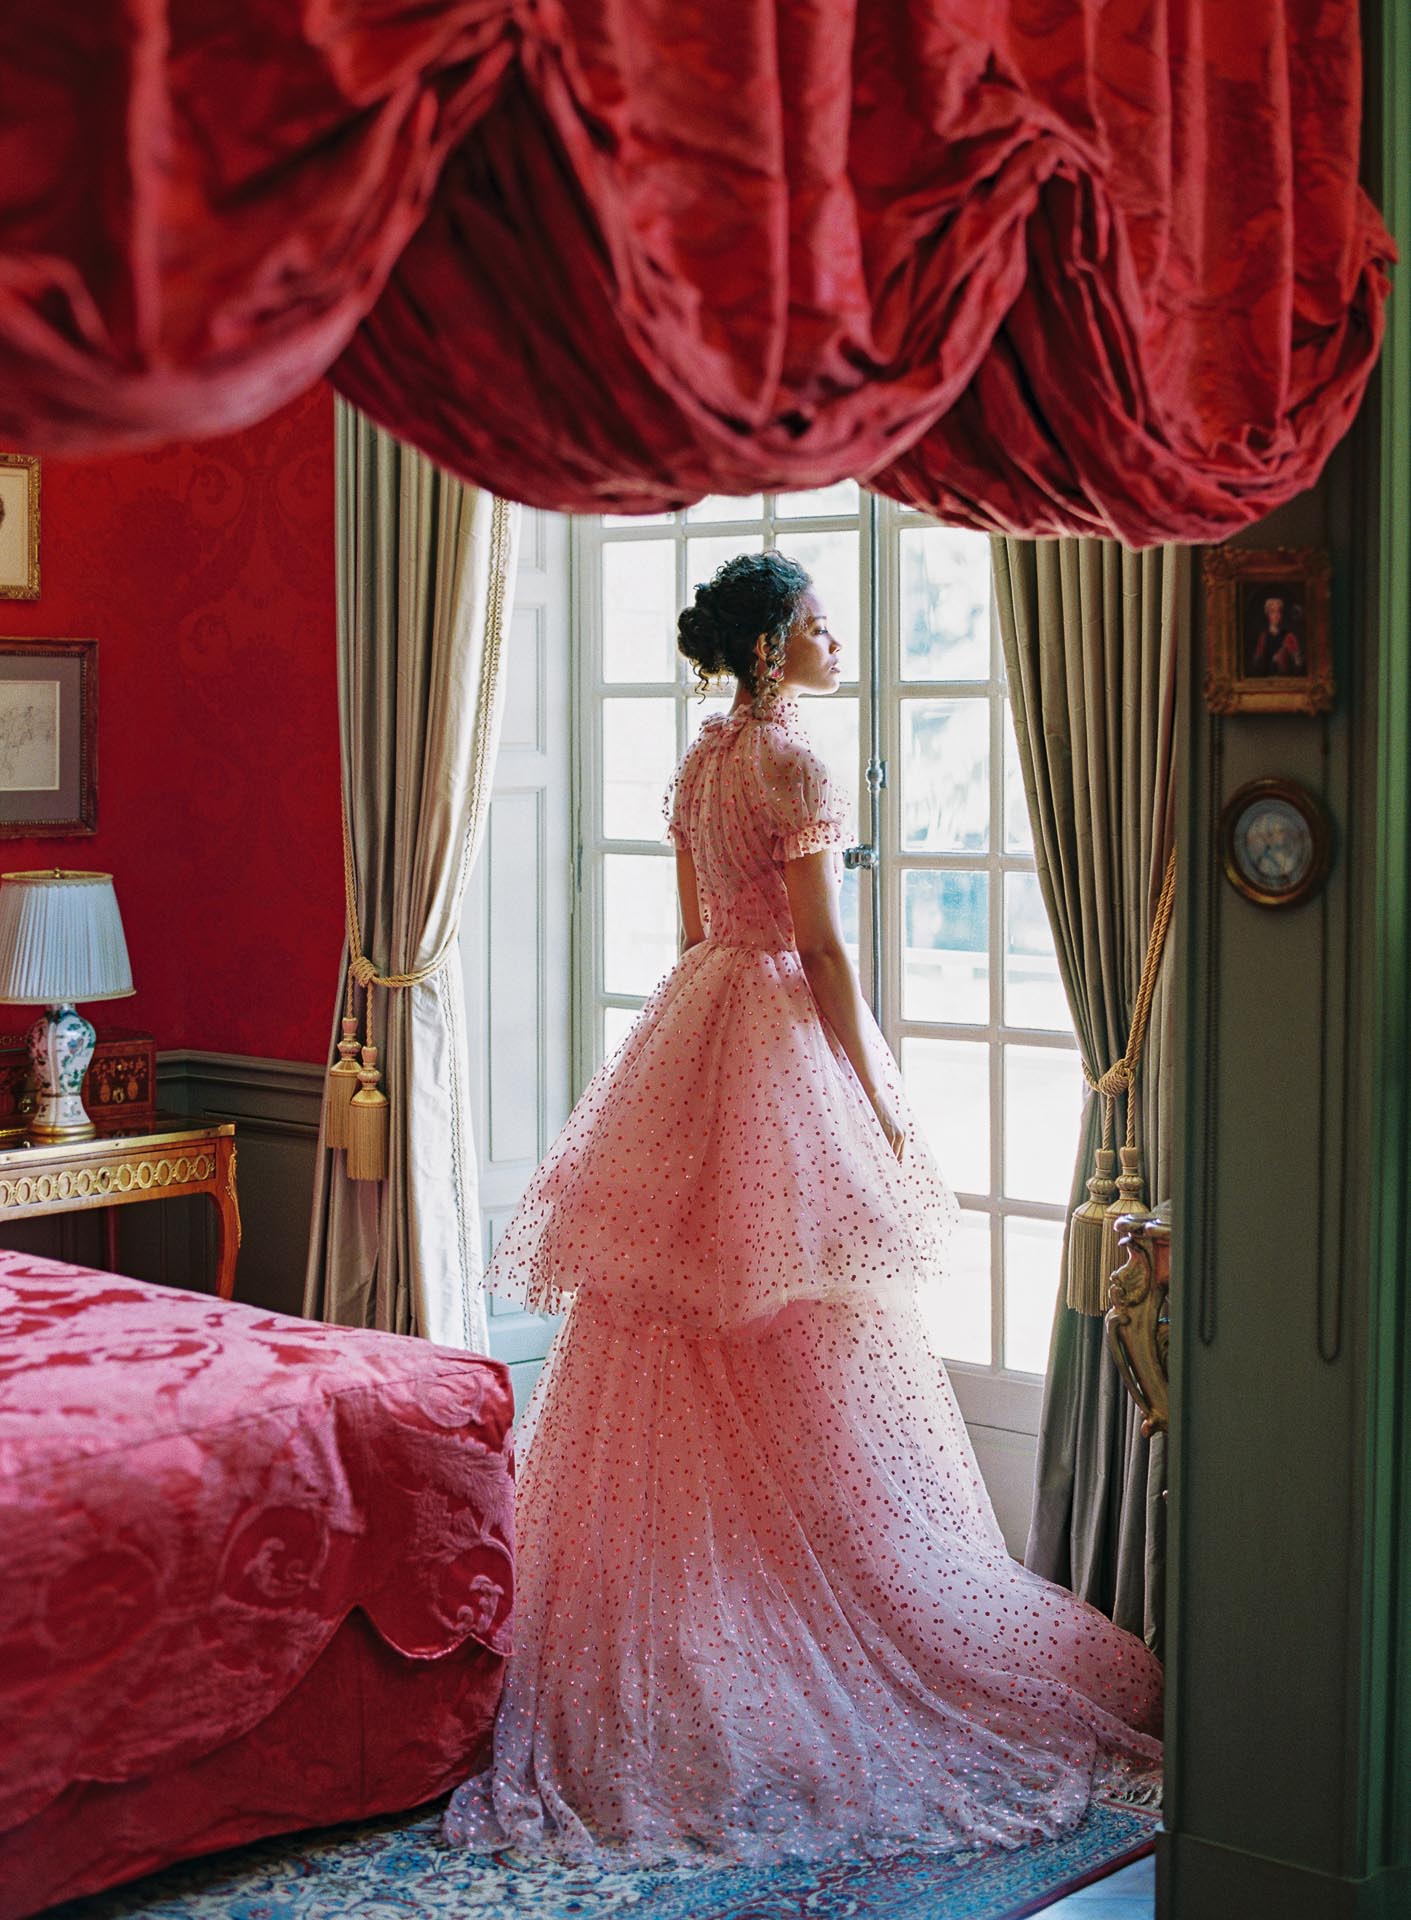 chateau de villette fashion inspiration styled shoot editorial wedding venue france chateau wedding red suite